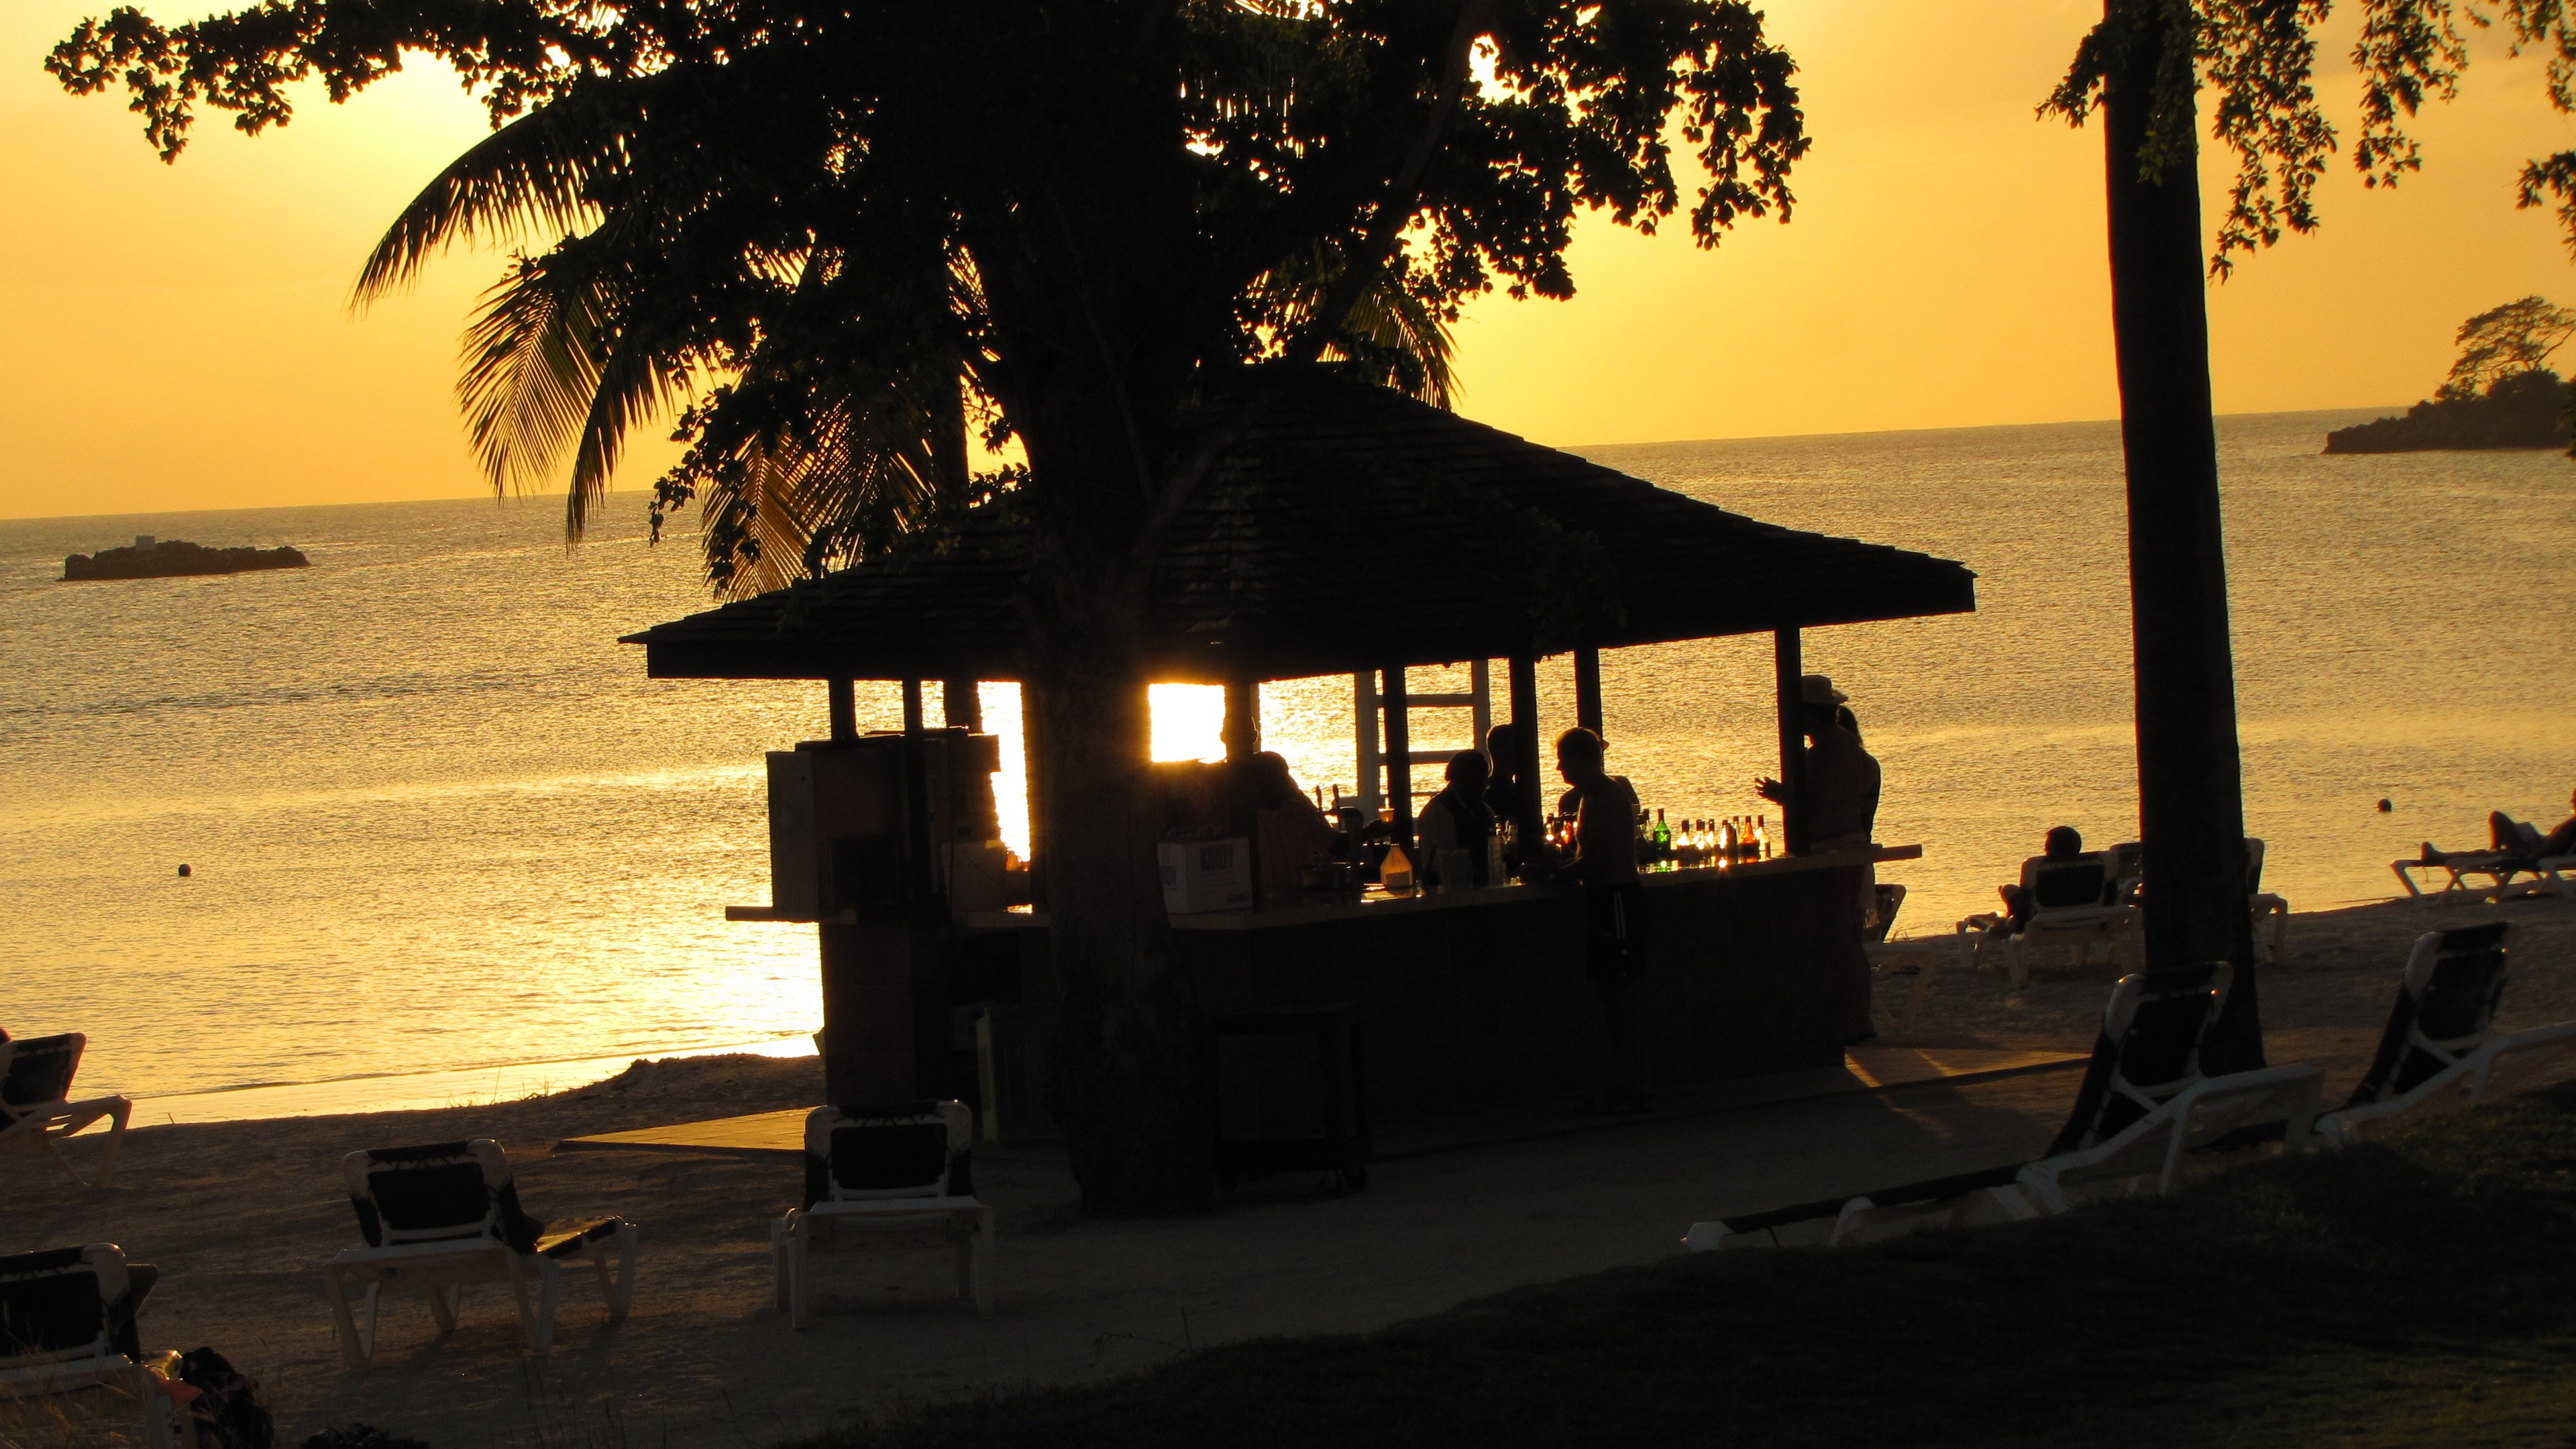 General 3840x2160 Jamaica beach hut silhouette sunset trees tropical sunlight people low light